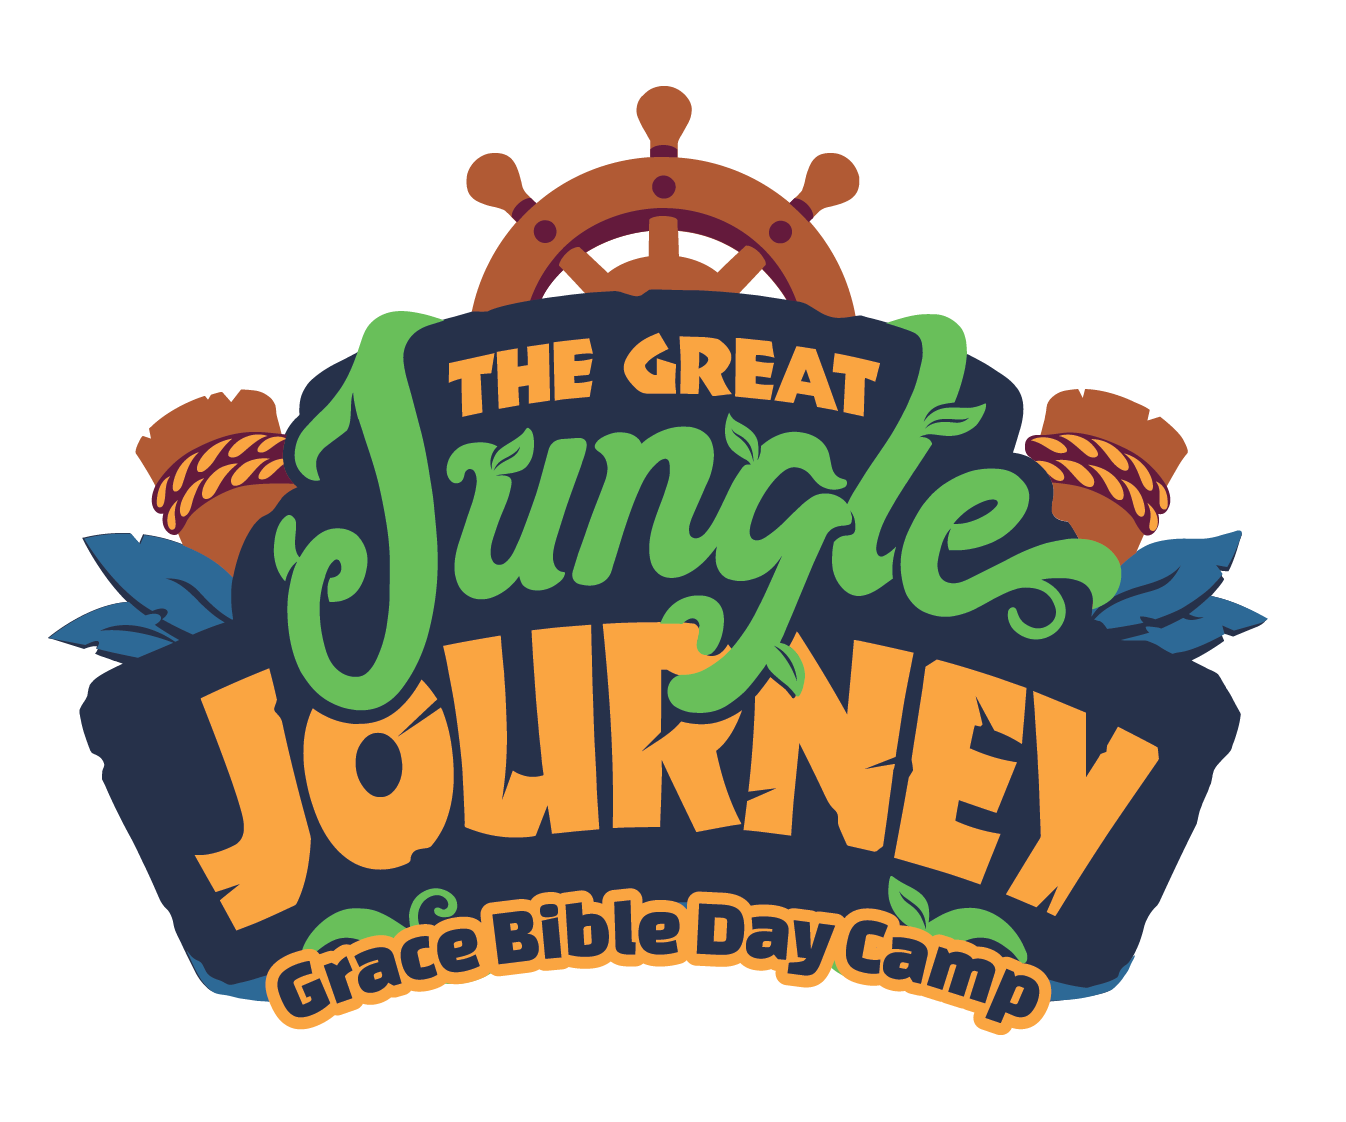 Grace Bible Day Camp - Jungle Journey